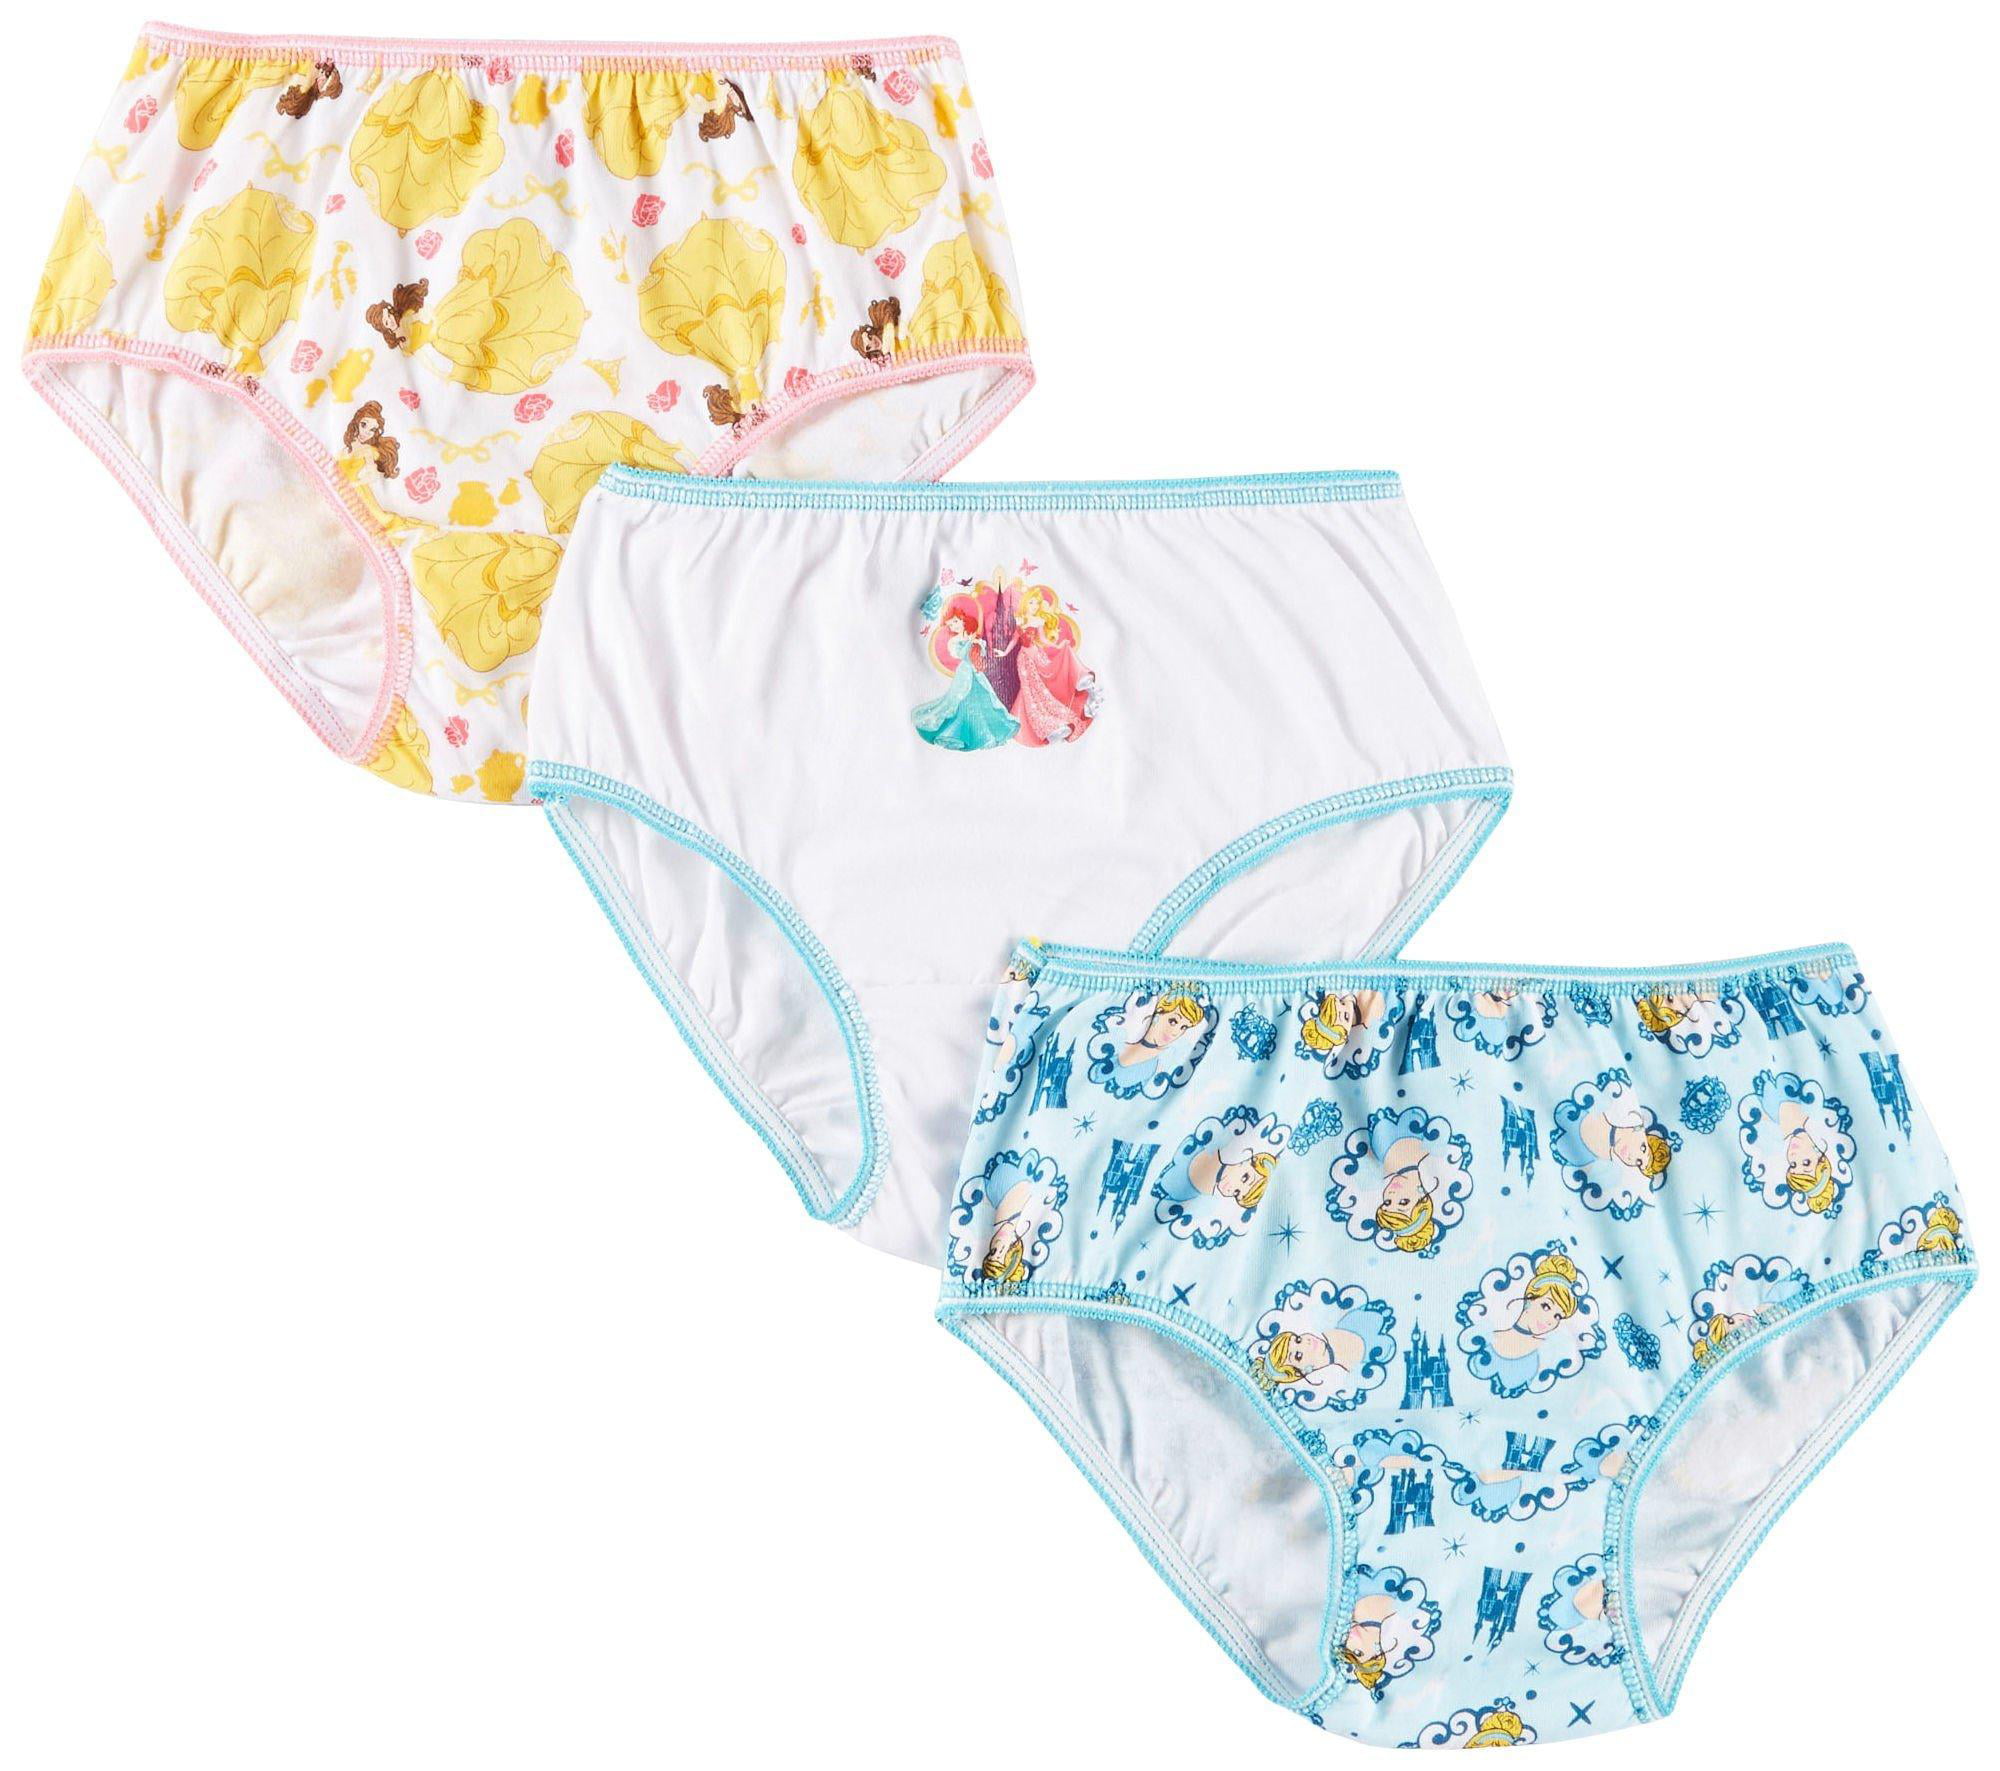 Disney Princess Girls Underwear Panty by Hanes 